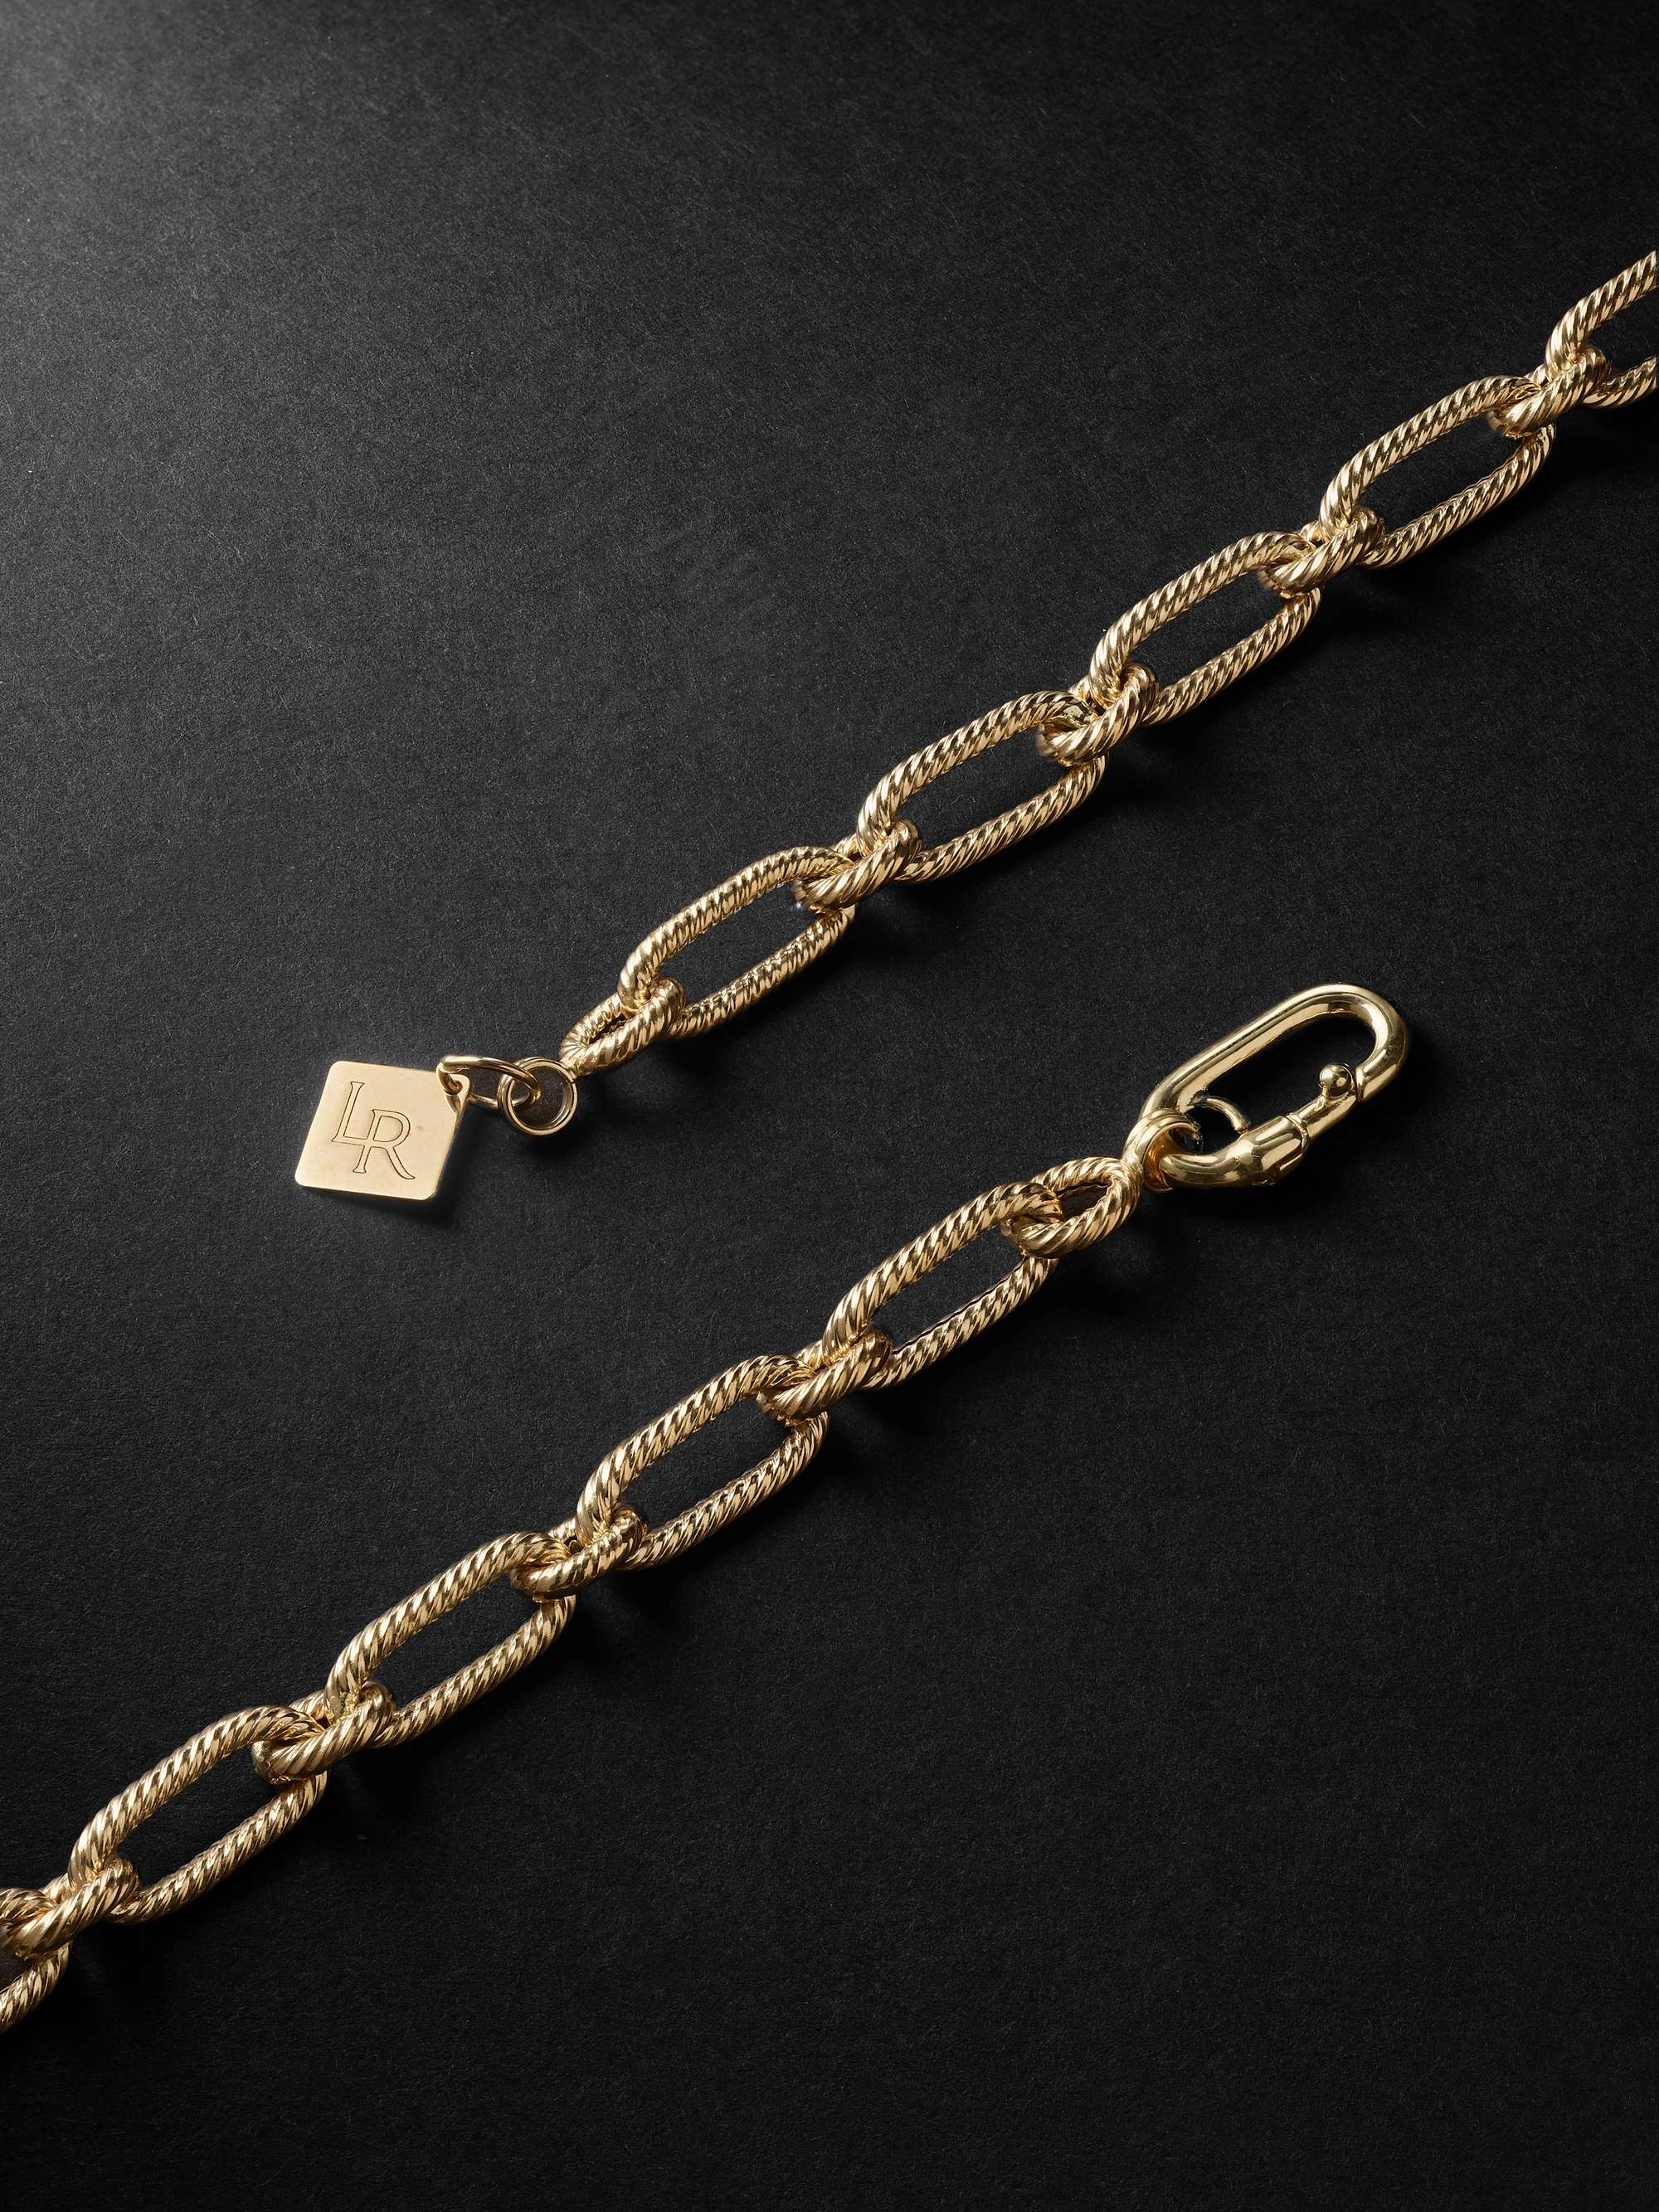 LAUREN RUBINSKI Gold and Enamel Pendant Necklace